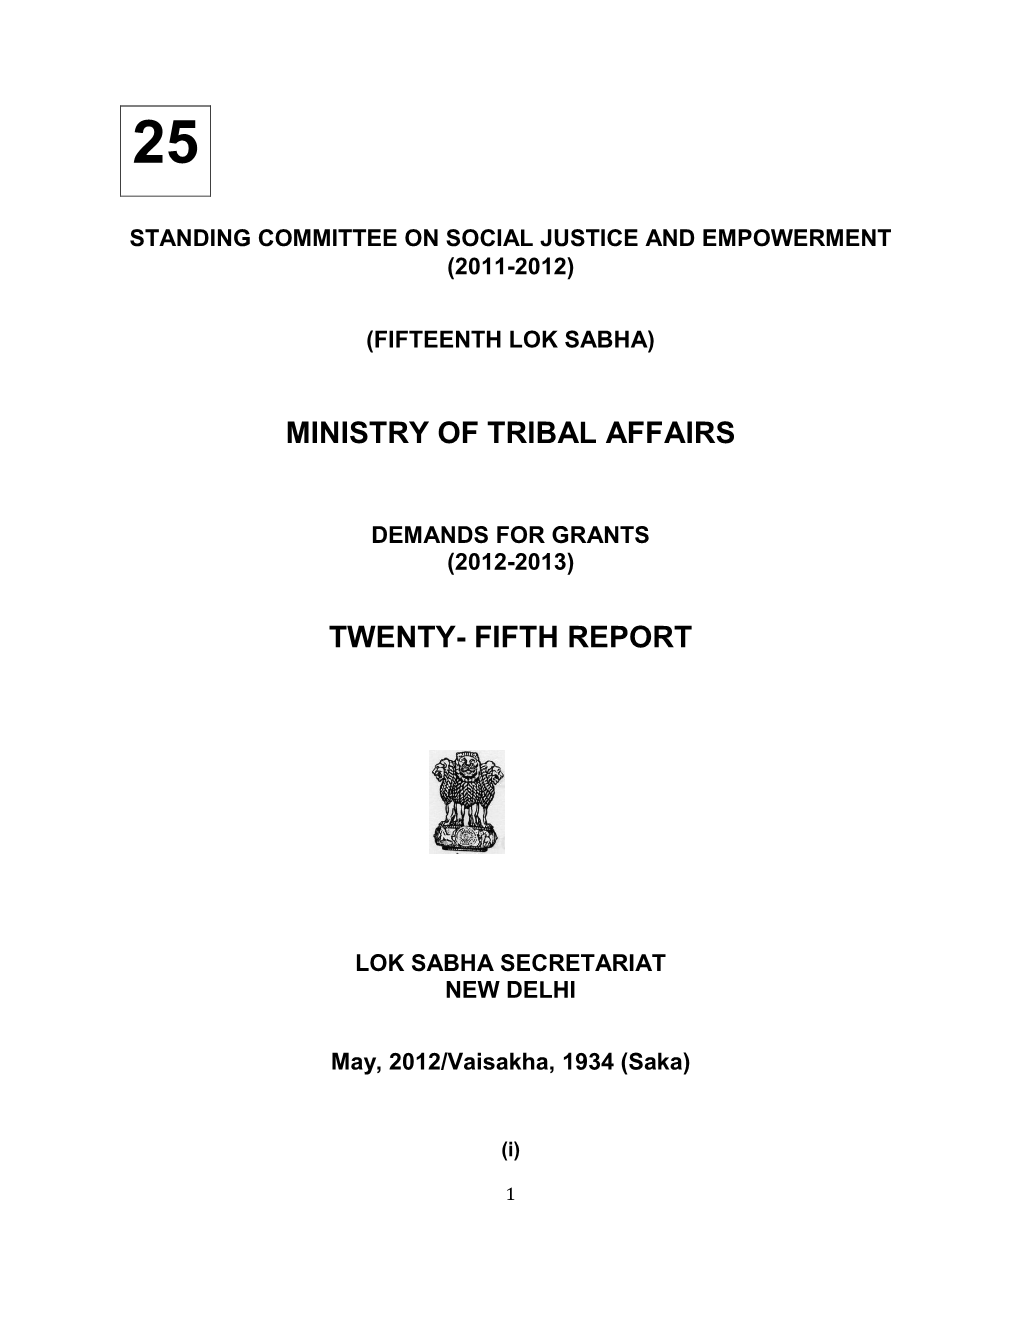 Report on DOF 2012-13